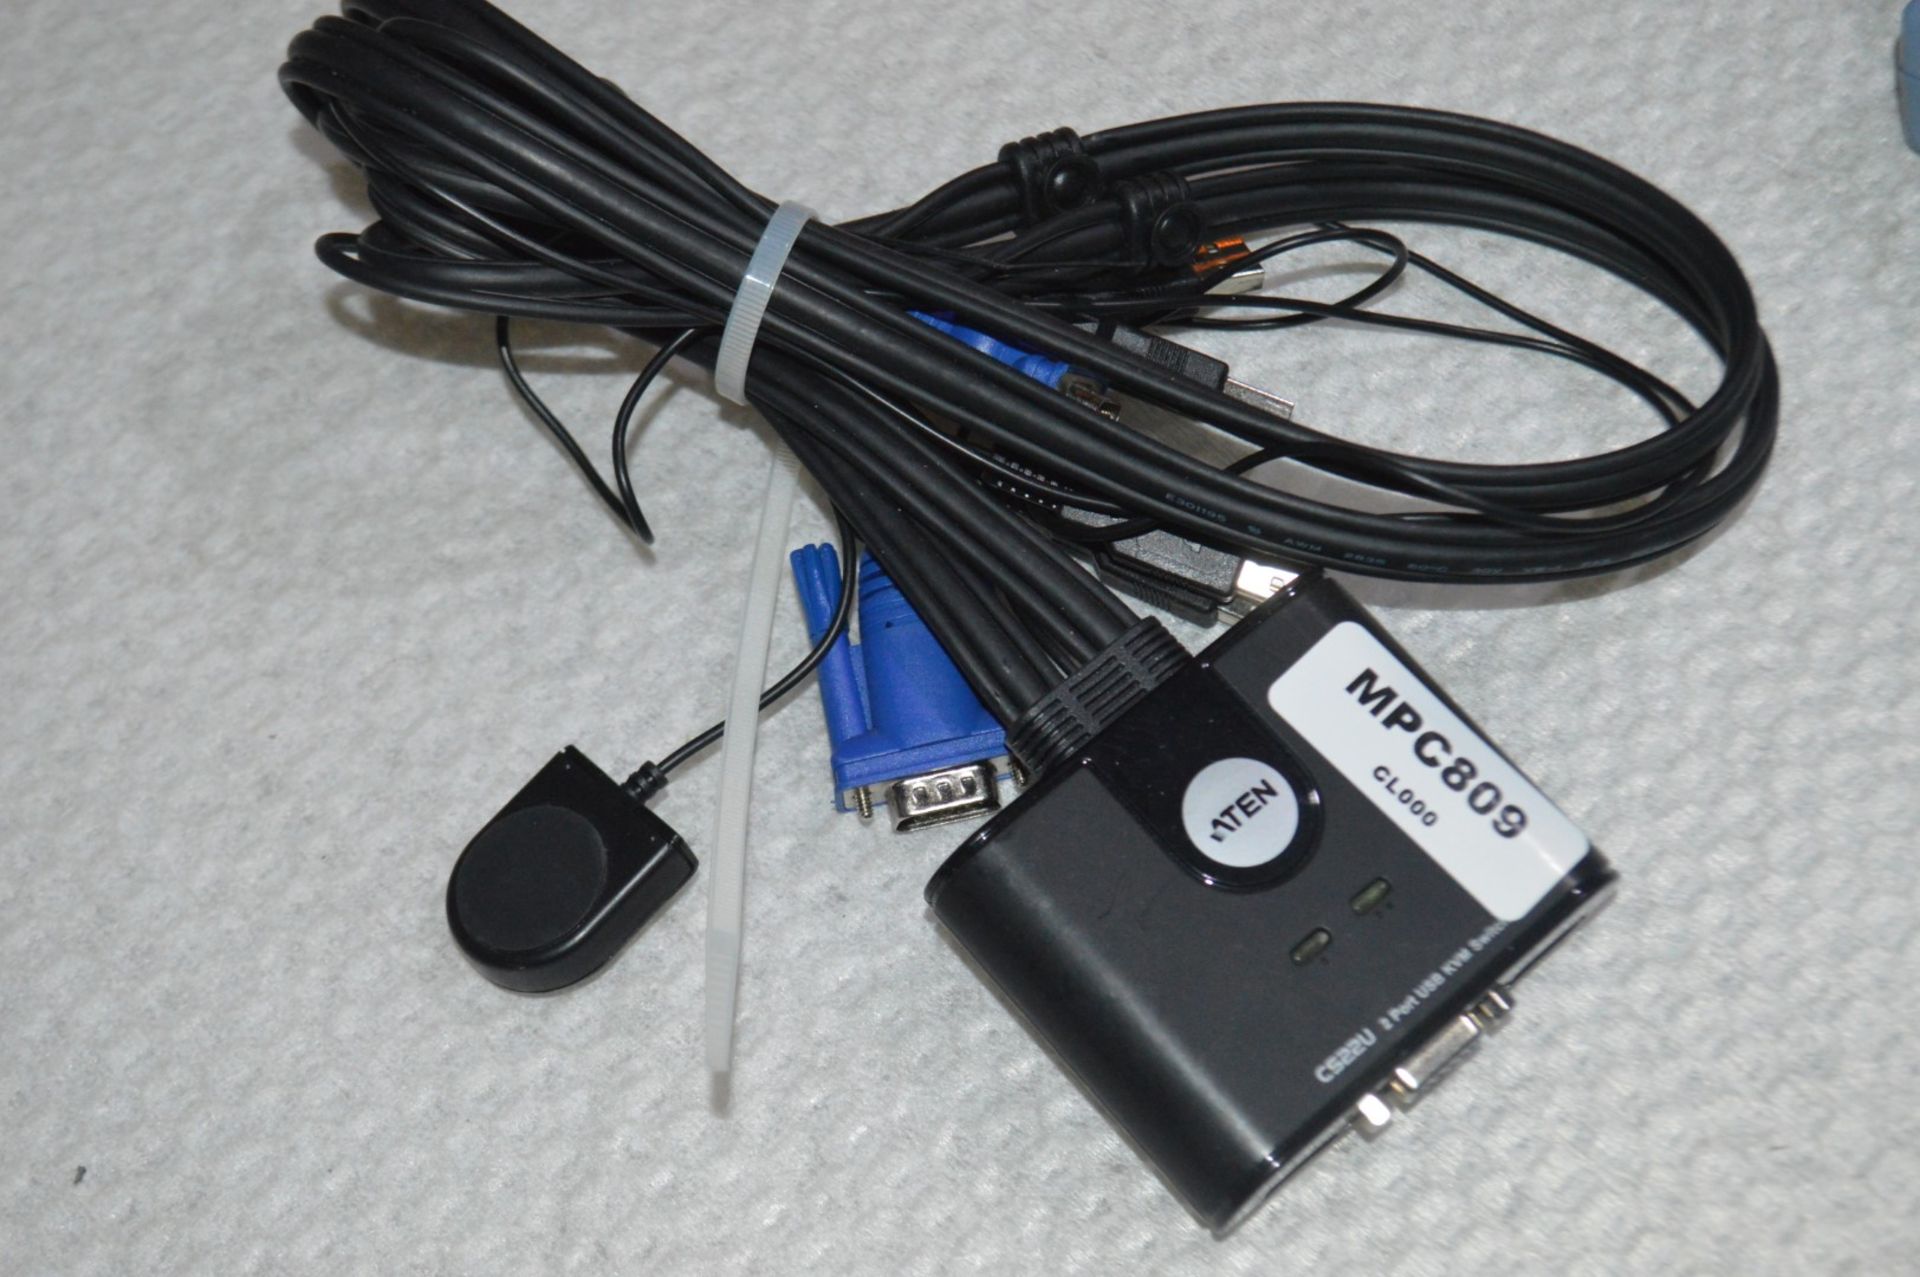 1 x CS22U 2-Port USB KVM Switch - Sold As Pictured - Ref: MPC809 - CL678 - Location: Altrincham